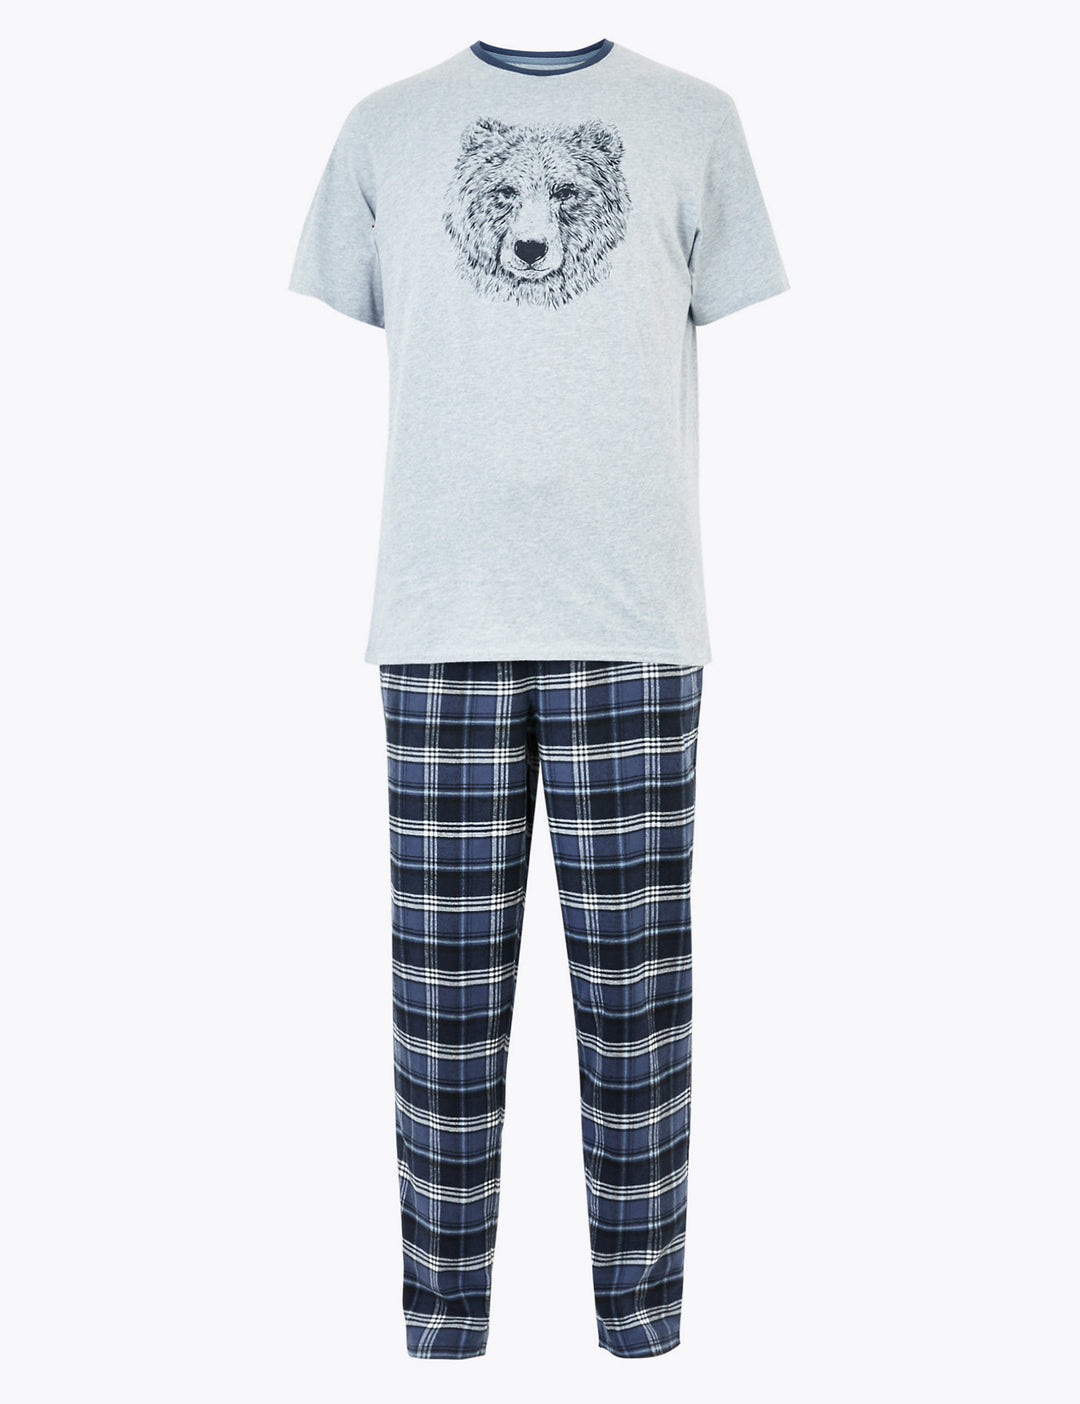 M&S Mens S/S T-Shirt Pajama Set T07/7557